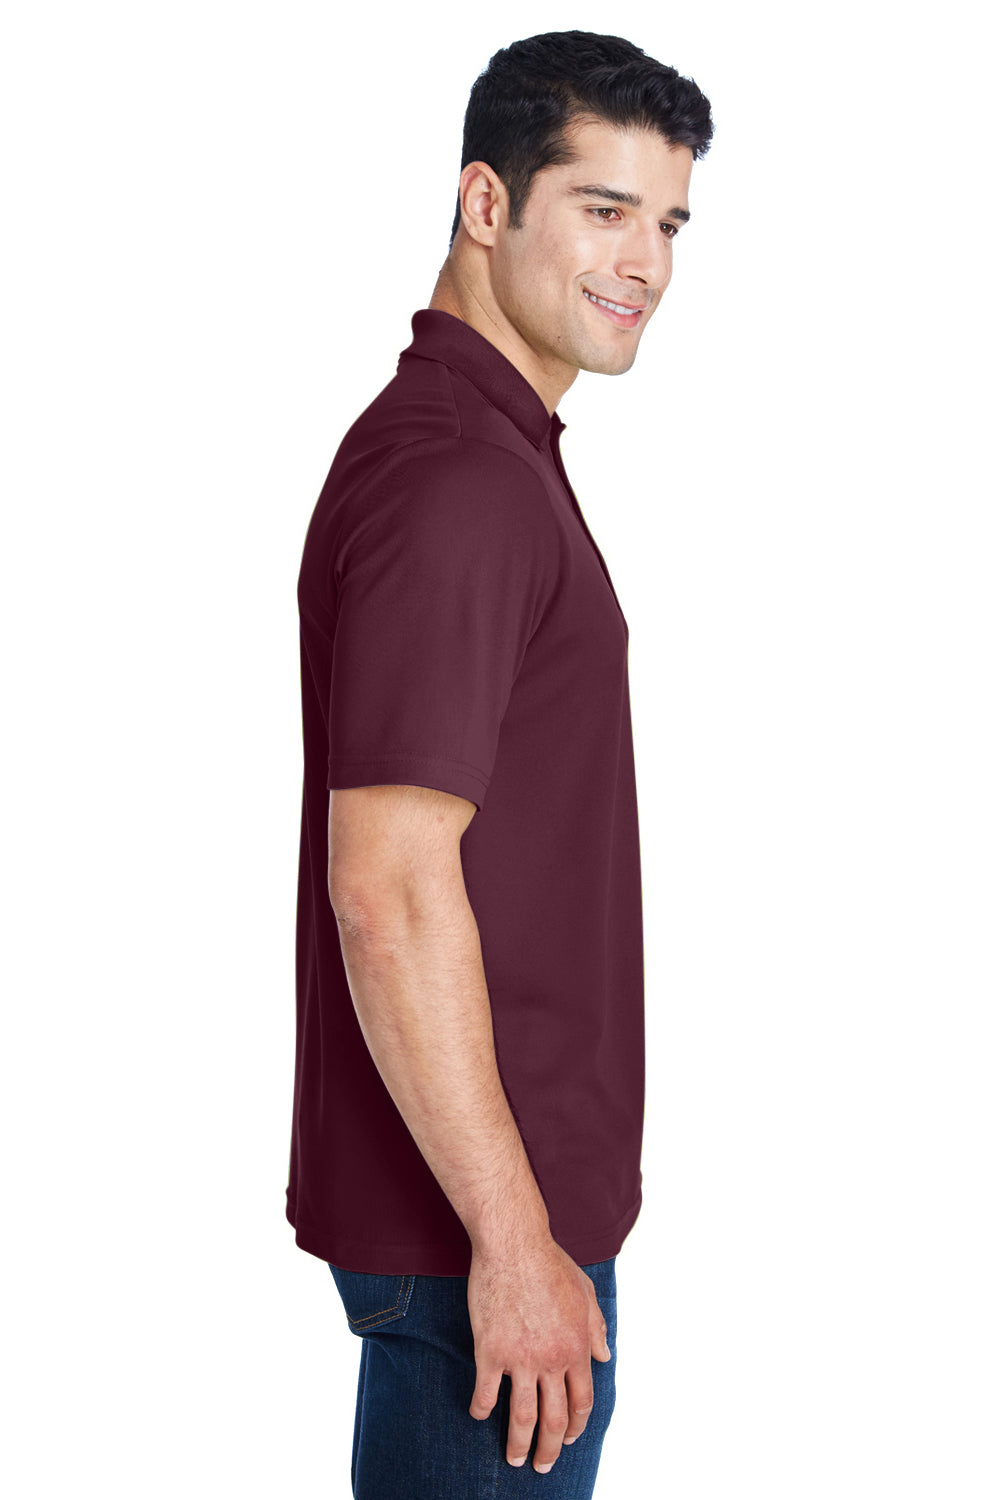 Core 365 88181 Mens Origin Performance Moisture Wicking Short Sleeve Polo Shirt Burgundy Side